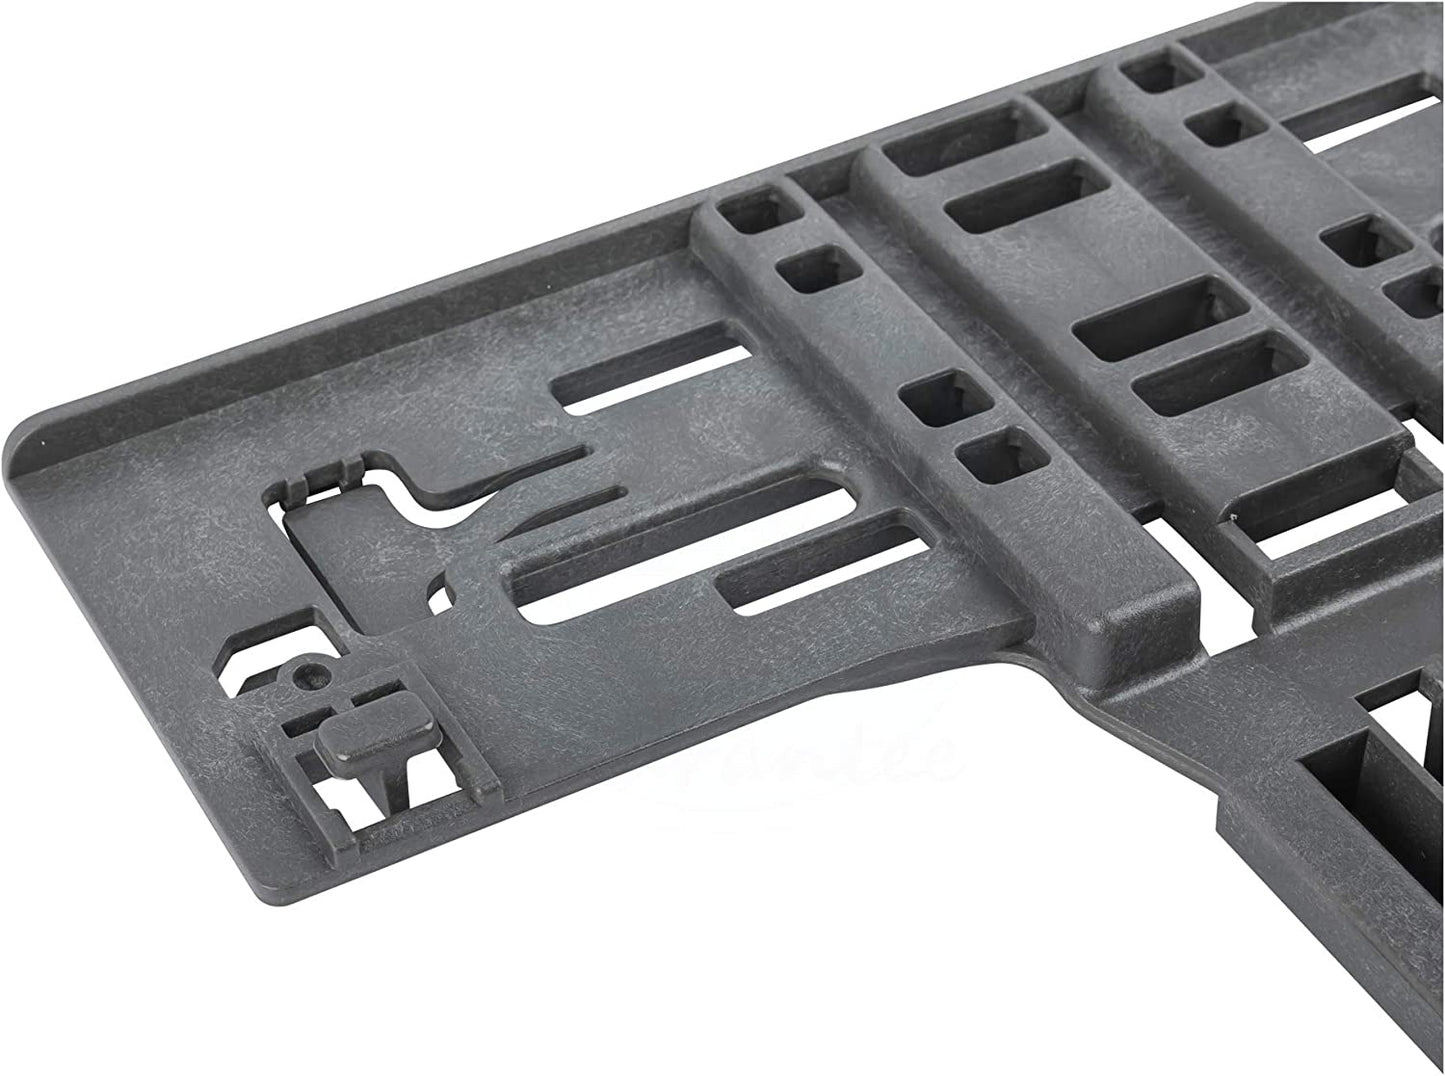 2 x W10546503 Upper Rack Adjuster Compatible with Whirlpool KitchenAid Dishwasher - WPW10546503